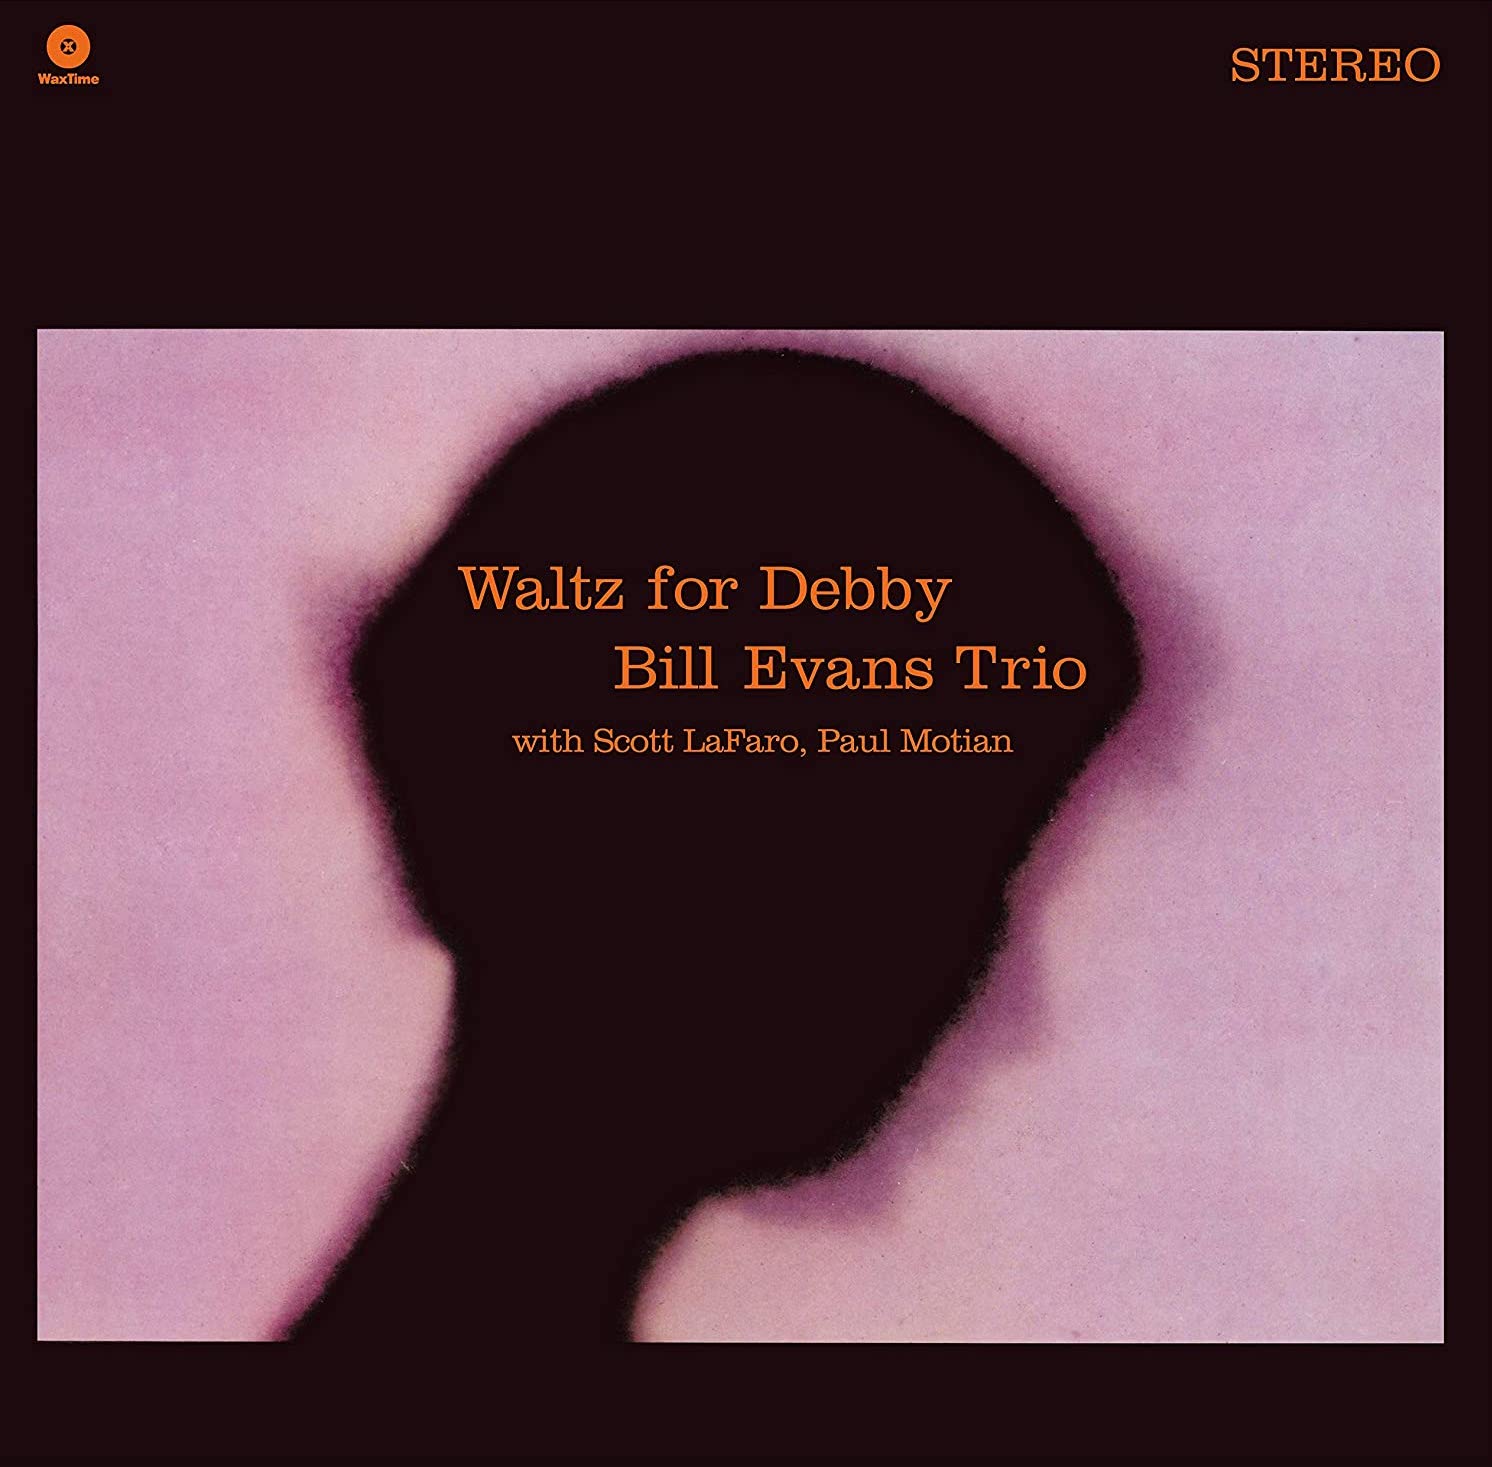 Bill Evans Trio — My foolish heart cover artwork